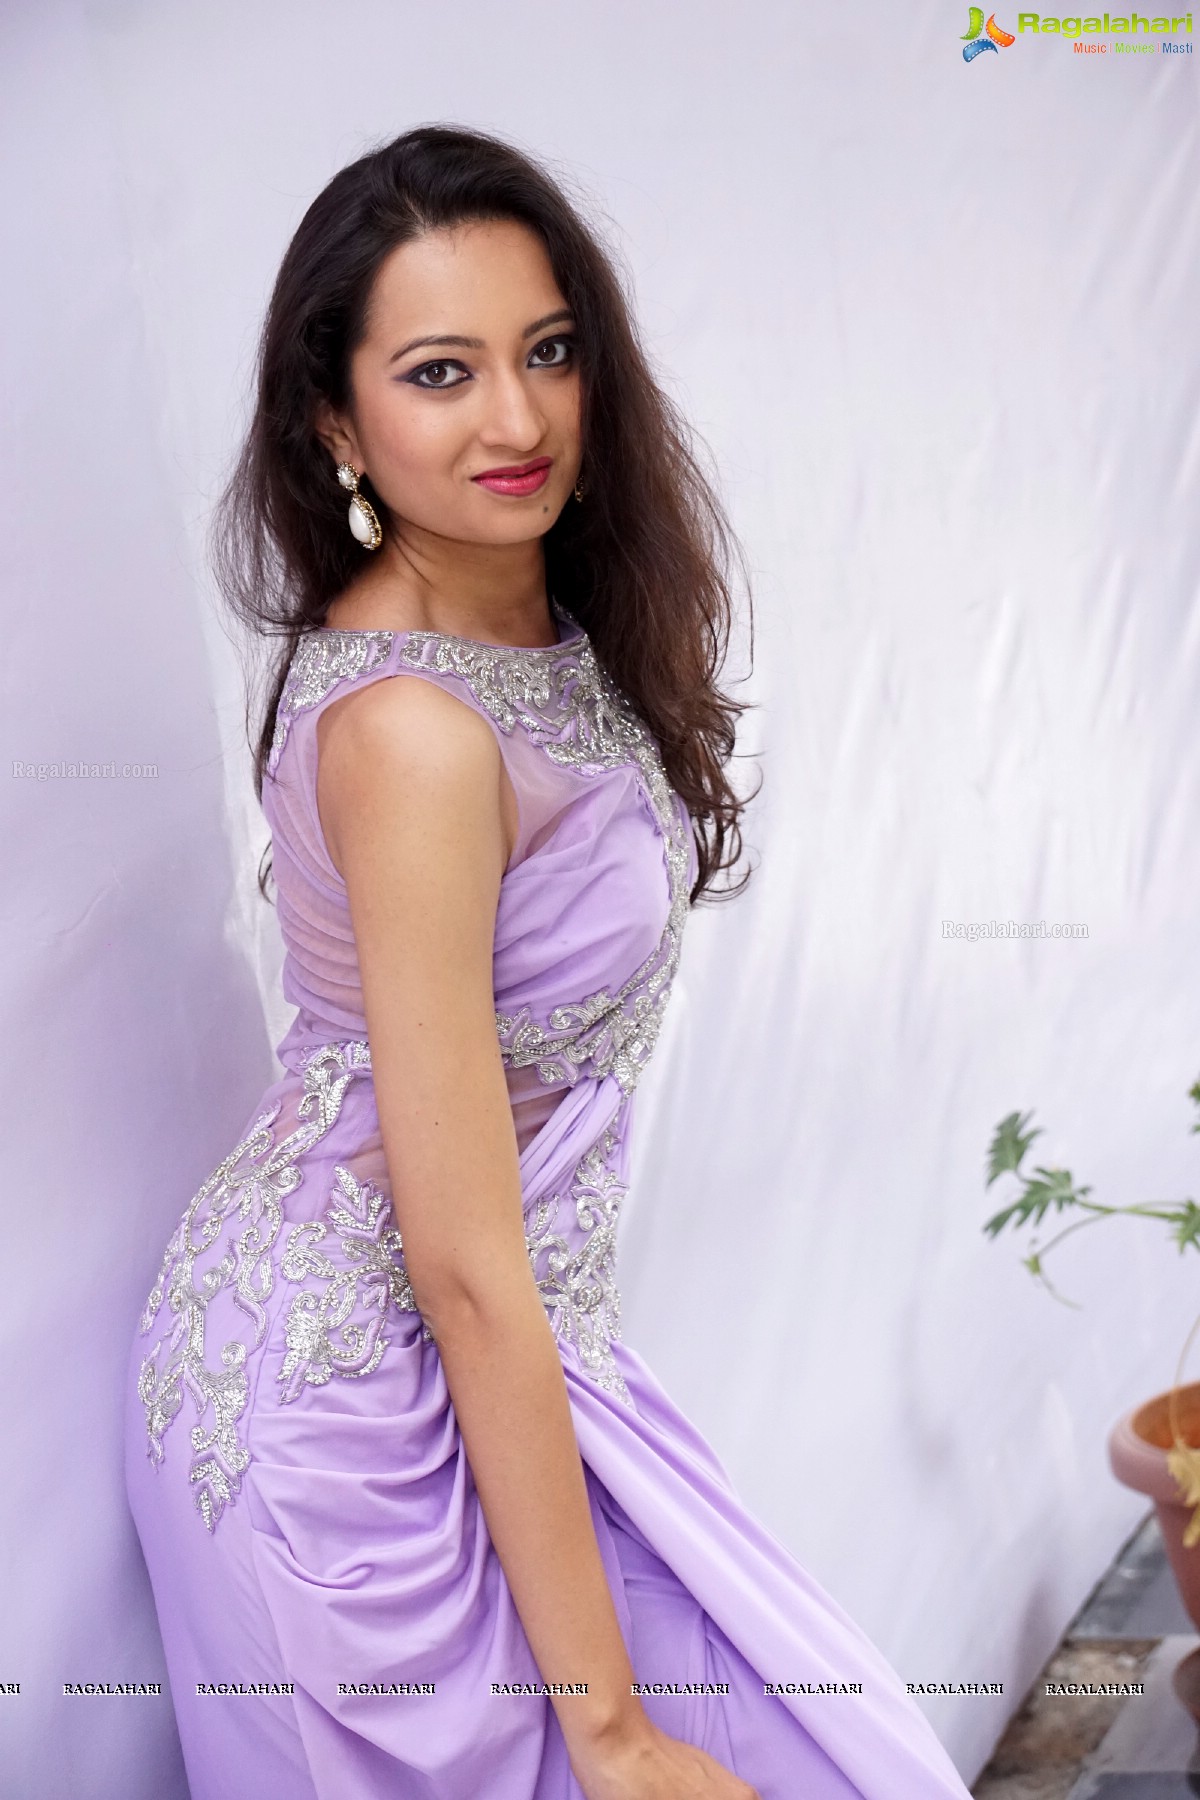 India Wedding Show 2015 Curtain Raiser